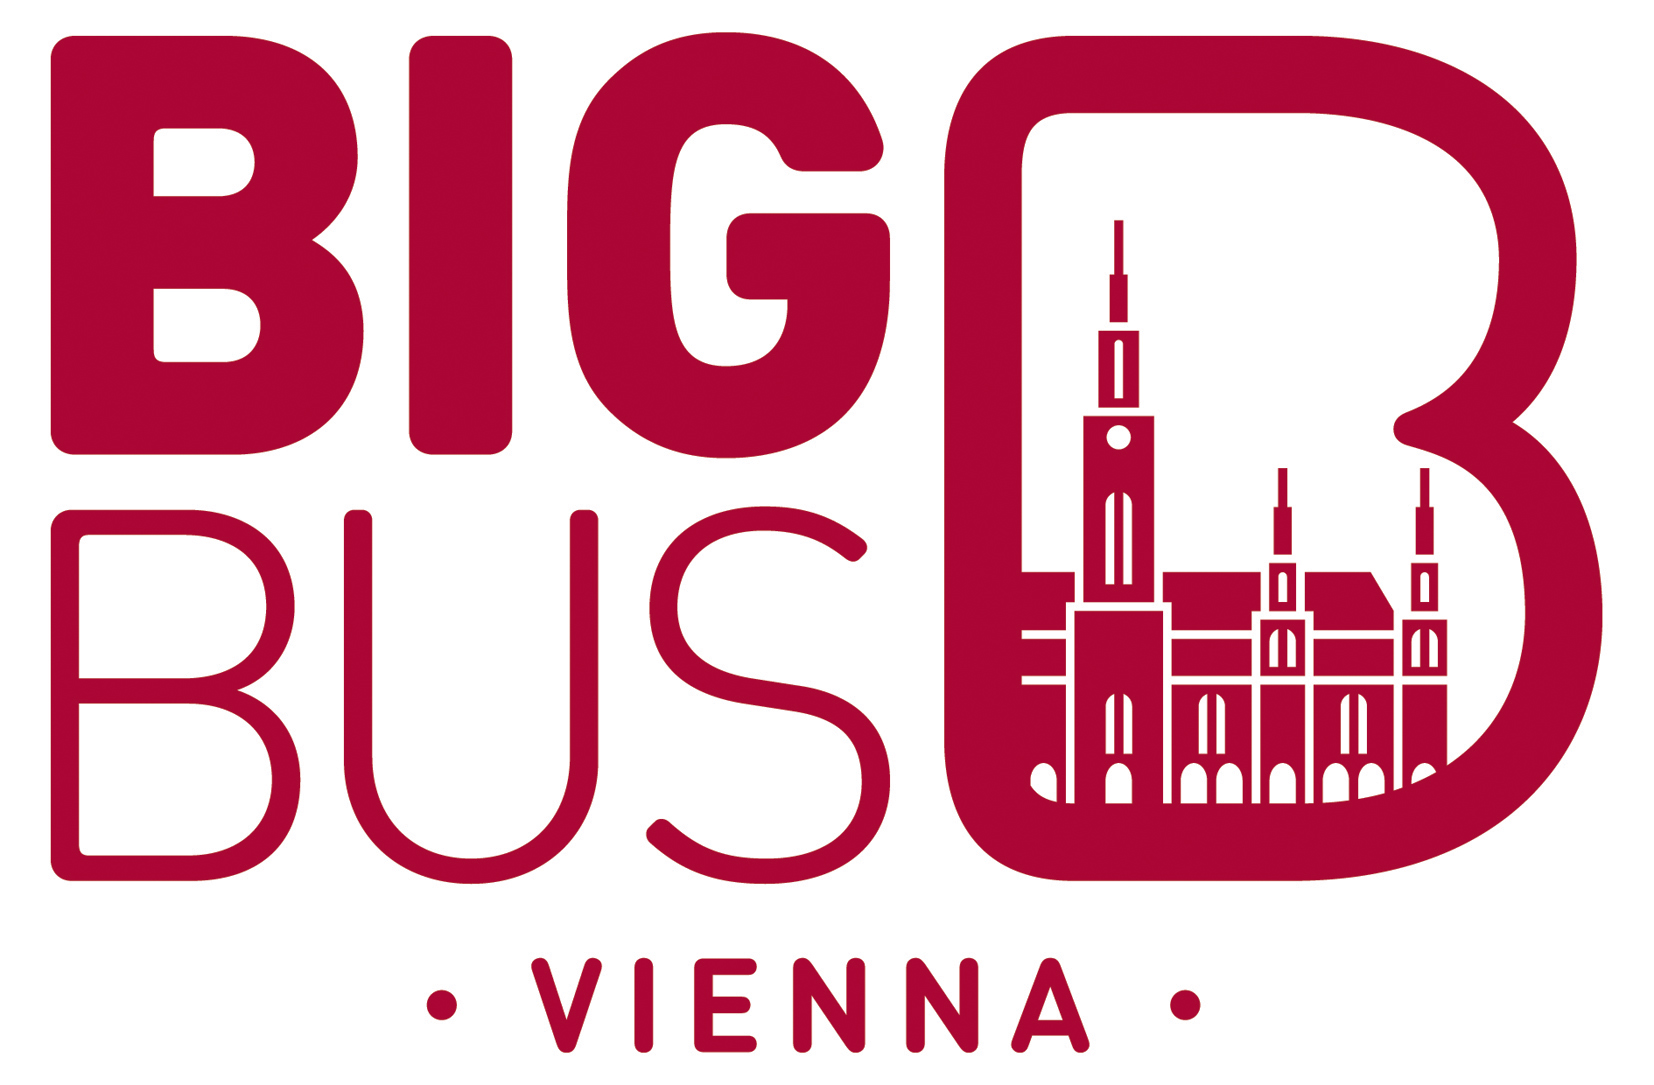 BB_Logo_City Name_VIENNA_BURGUNDY 194.jpg